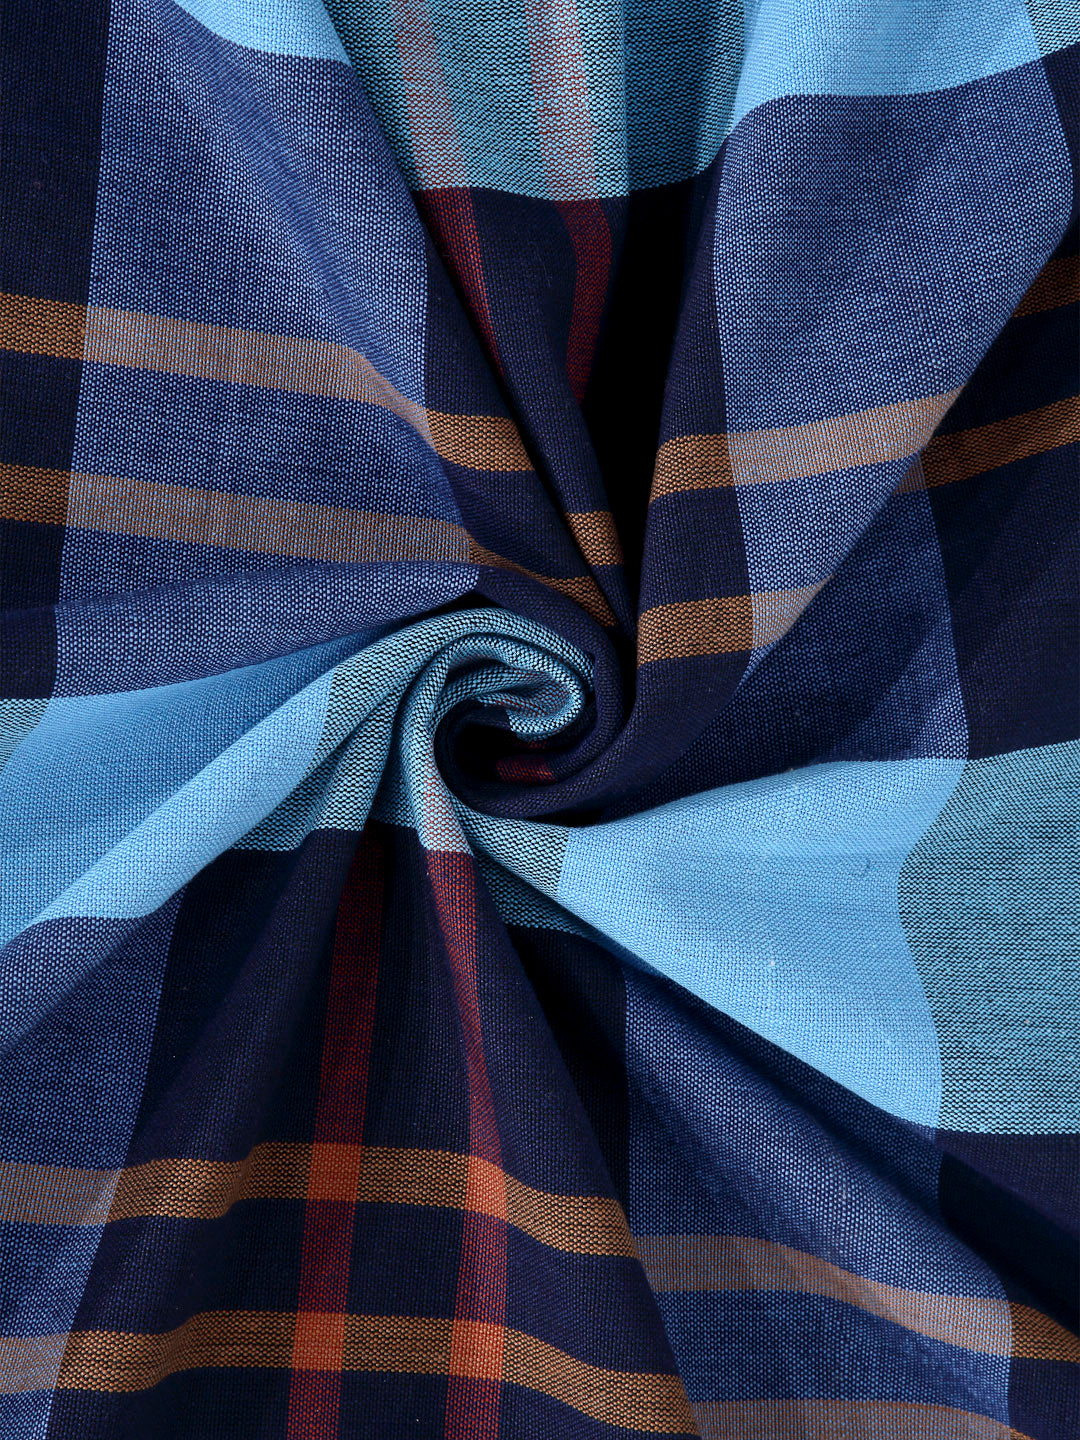 Arrabi Blue Checks Handwoven Cotton Super King Size Bedsheet with 2 Pillow Covers (270 X 270 cm)